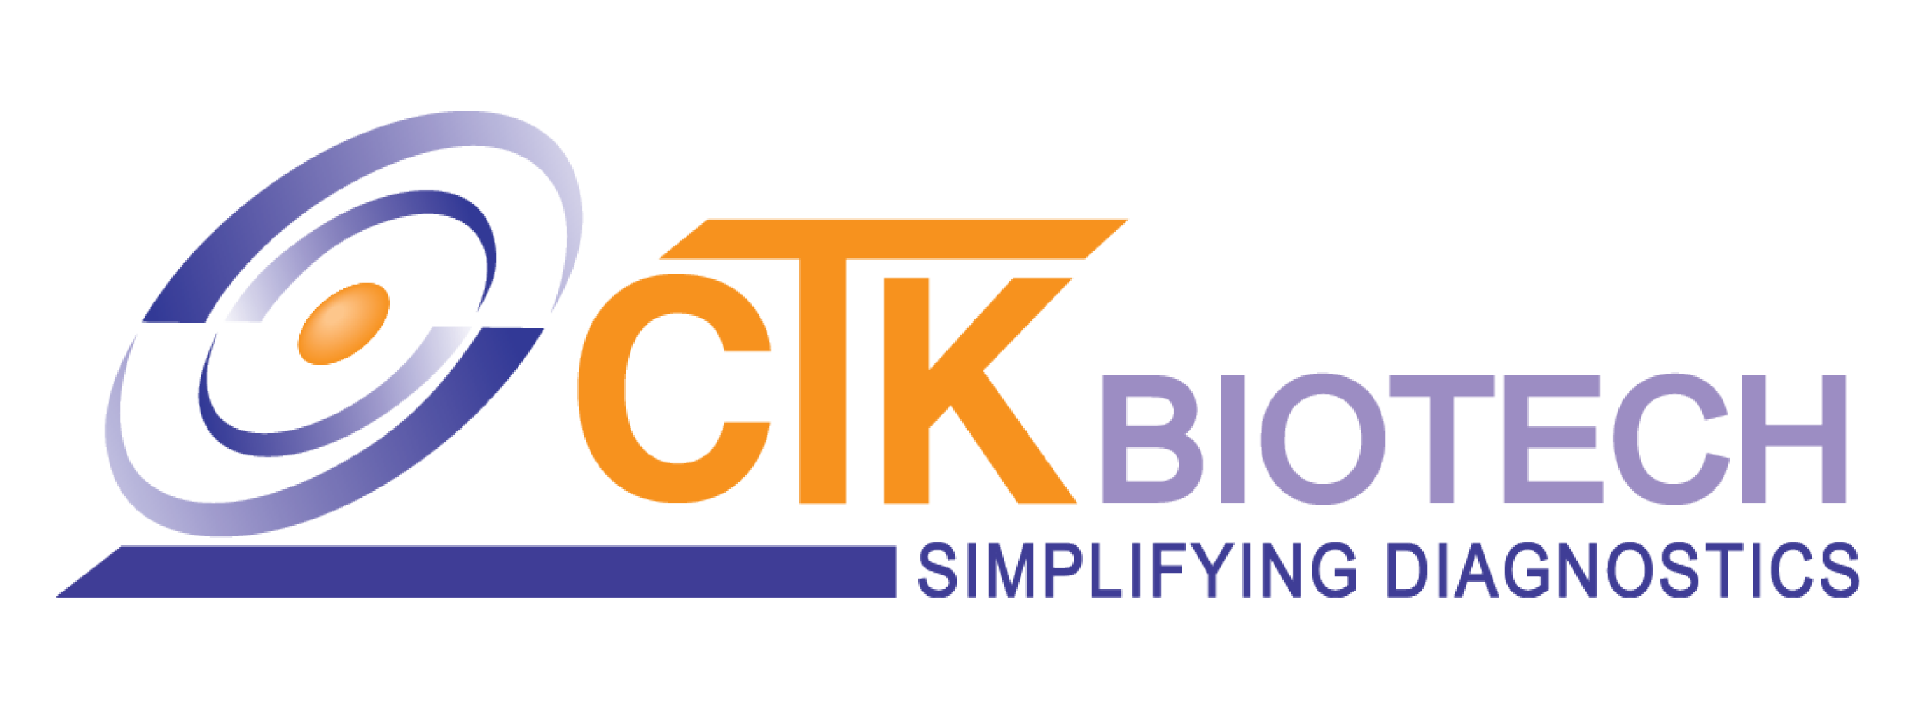 CTK Biotech